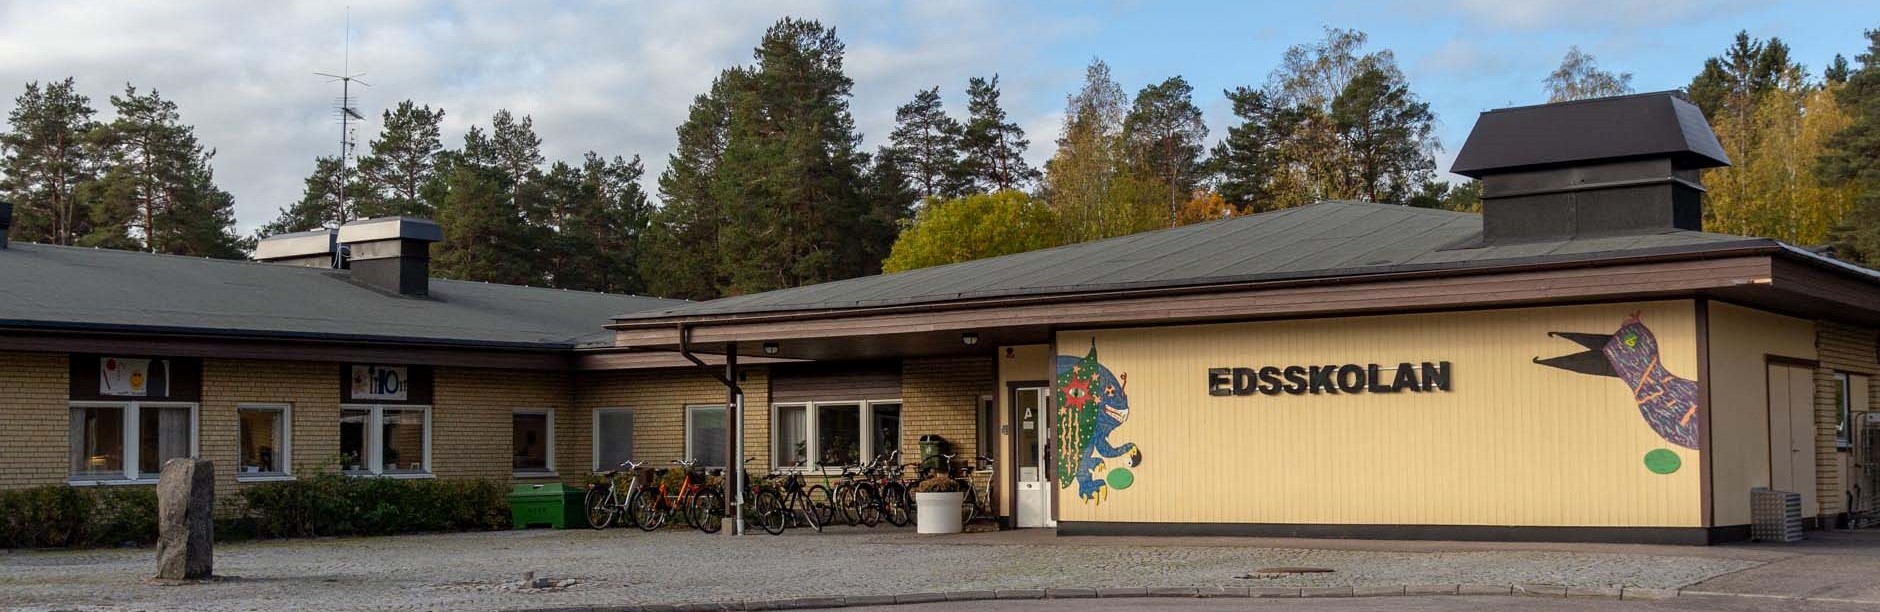 2018-10-10 Edsskolan 009 WEB LÅG.jpg